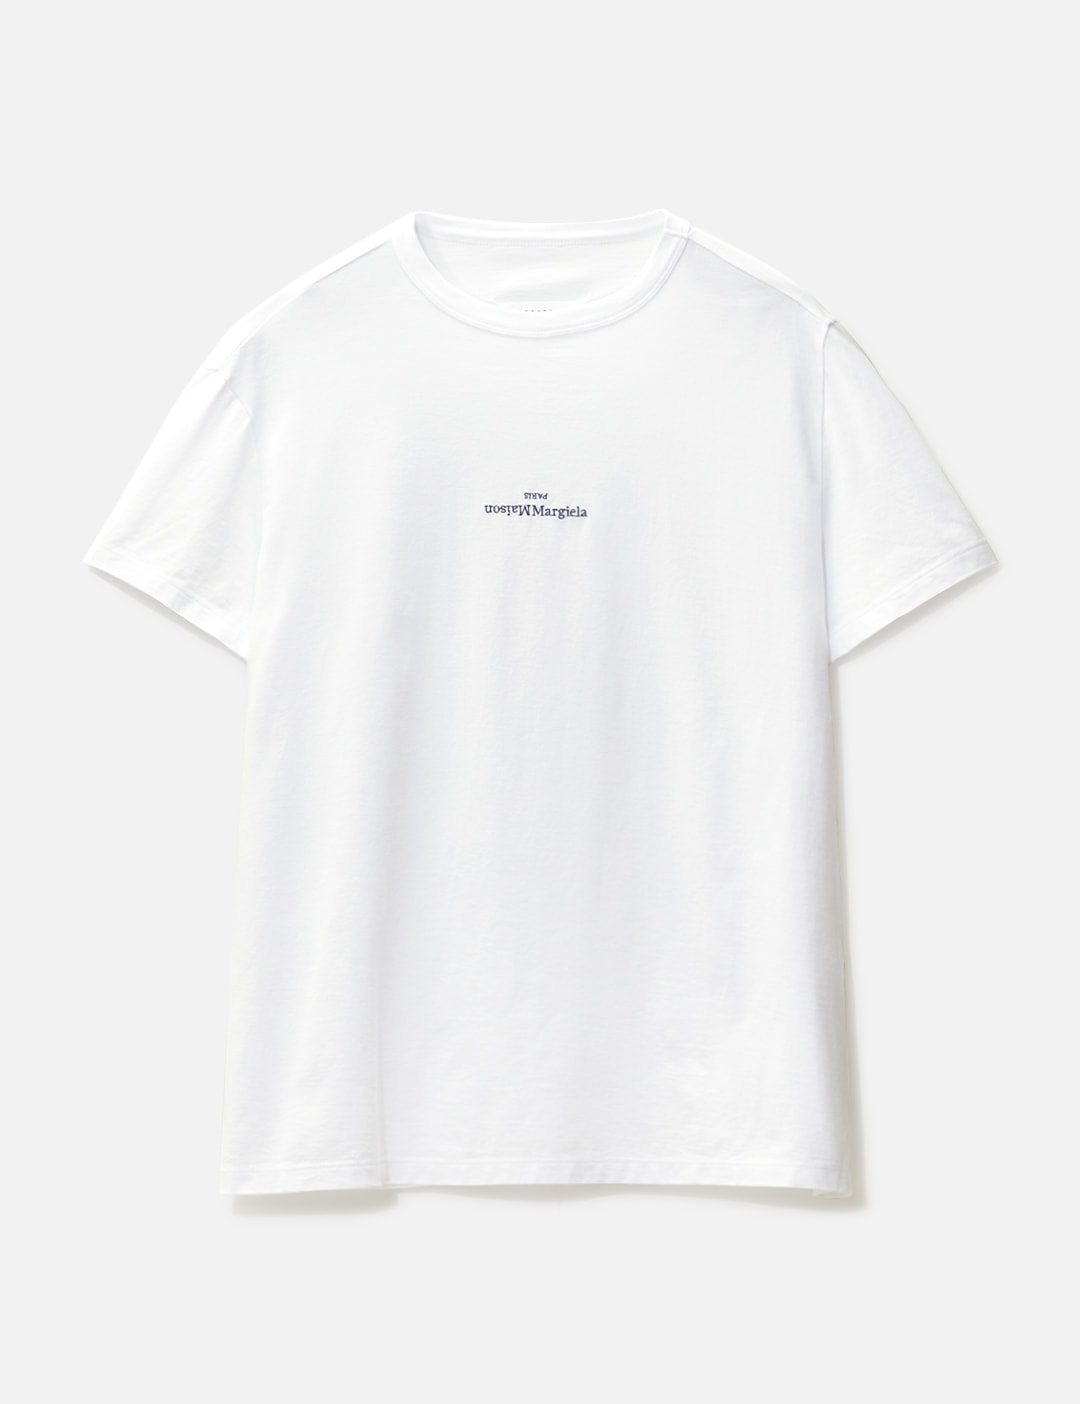 Maison Margiela - Upside Down Logo T-shirt | HBX - Globally Curated ...